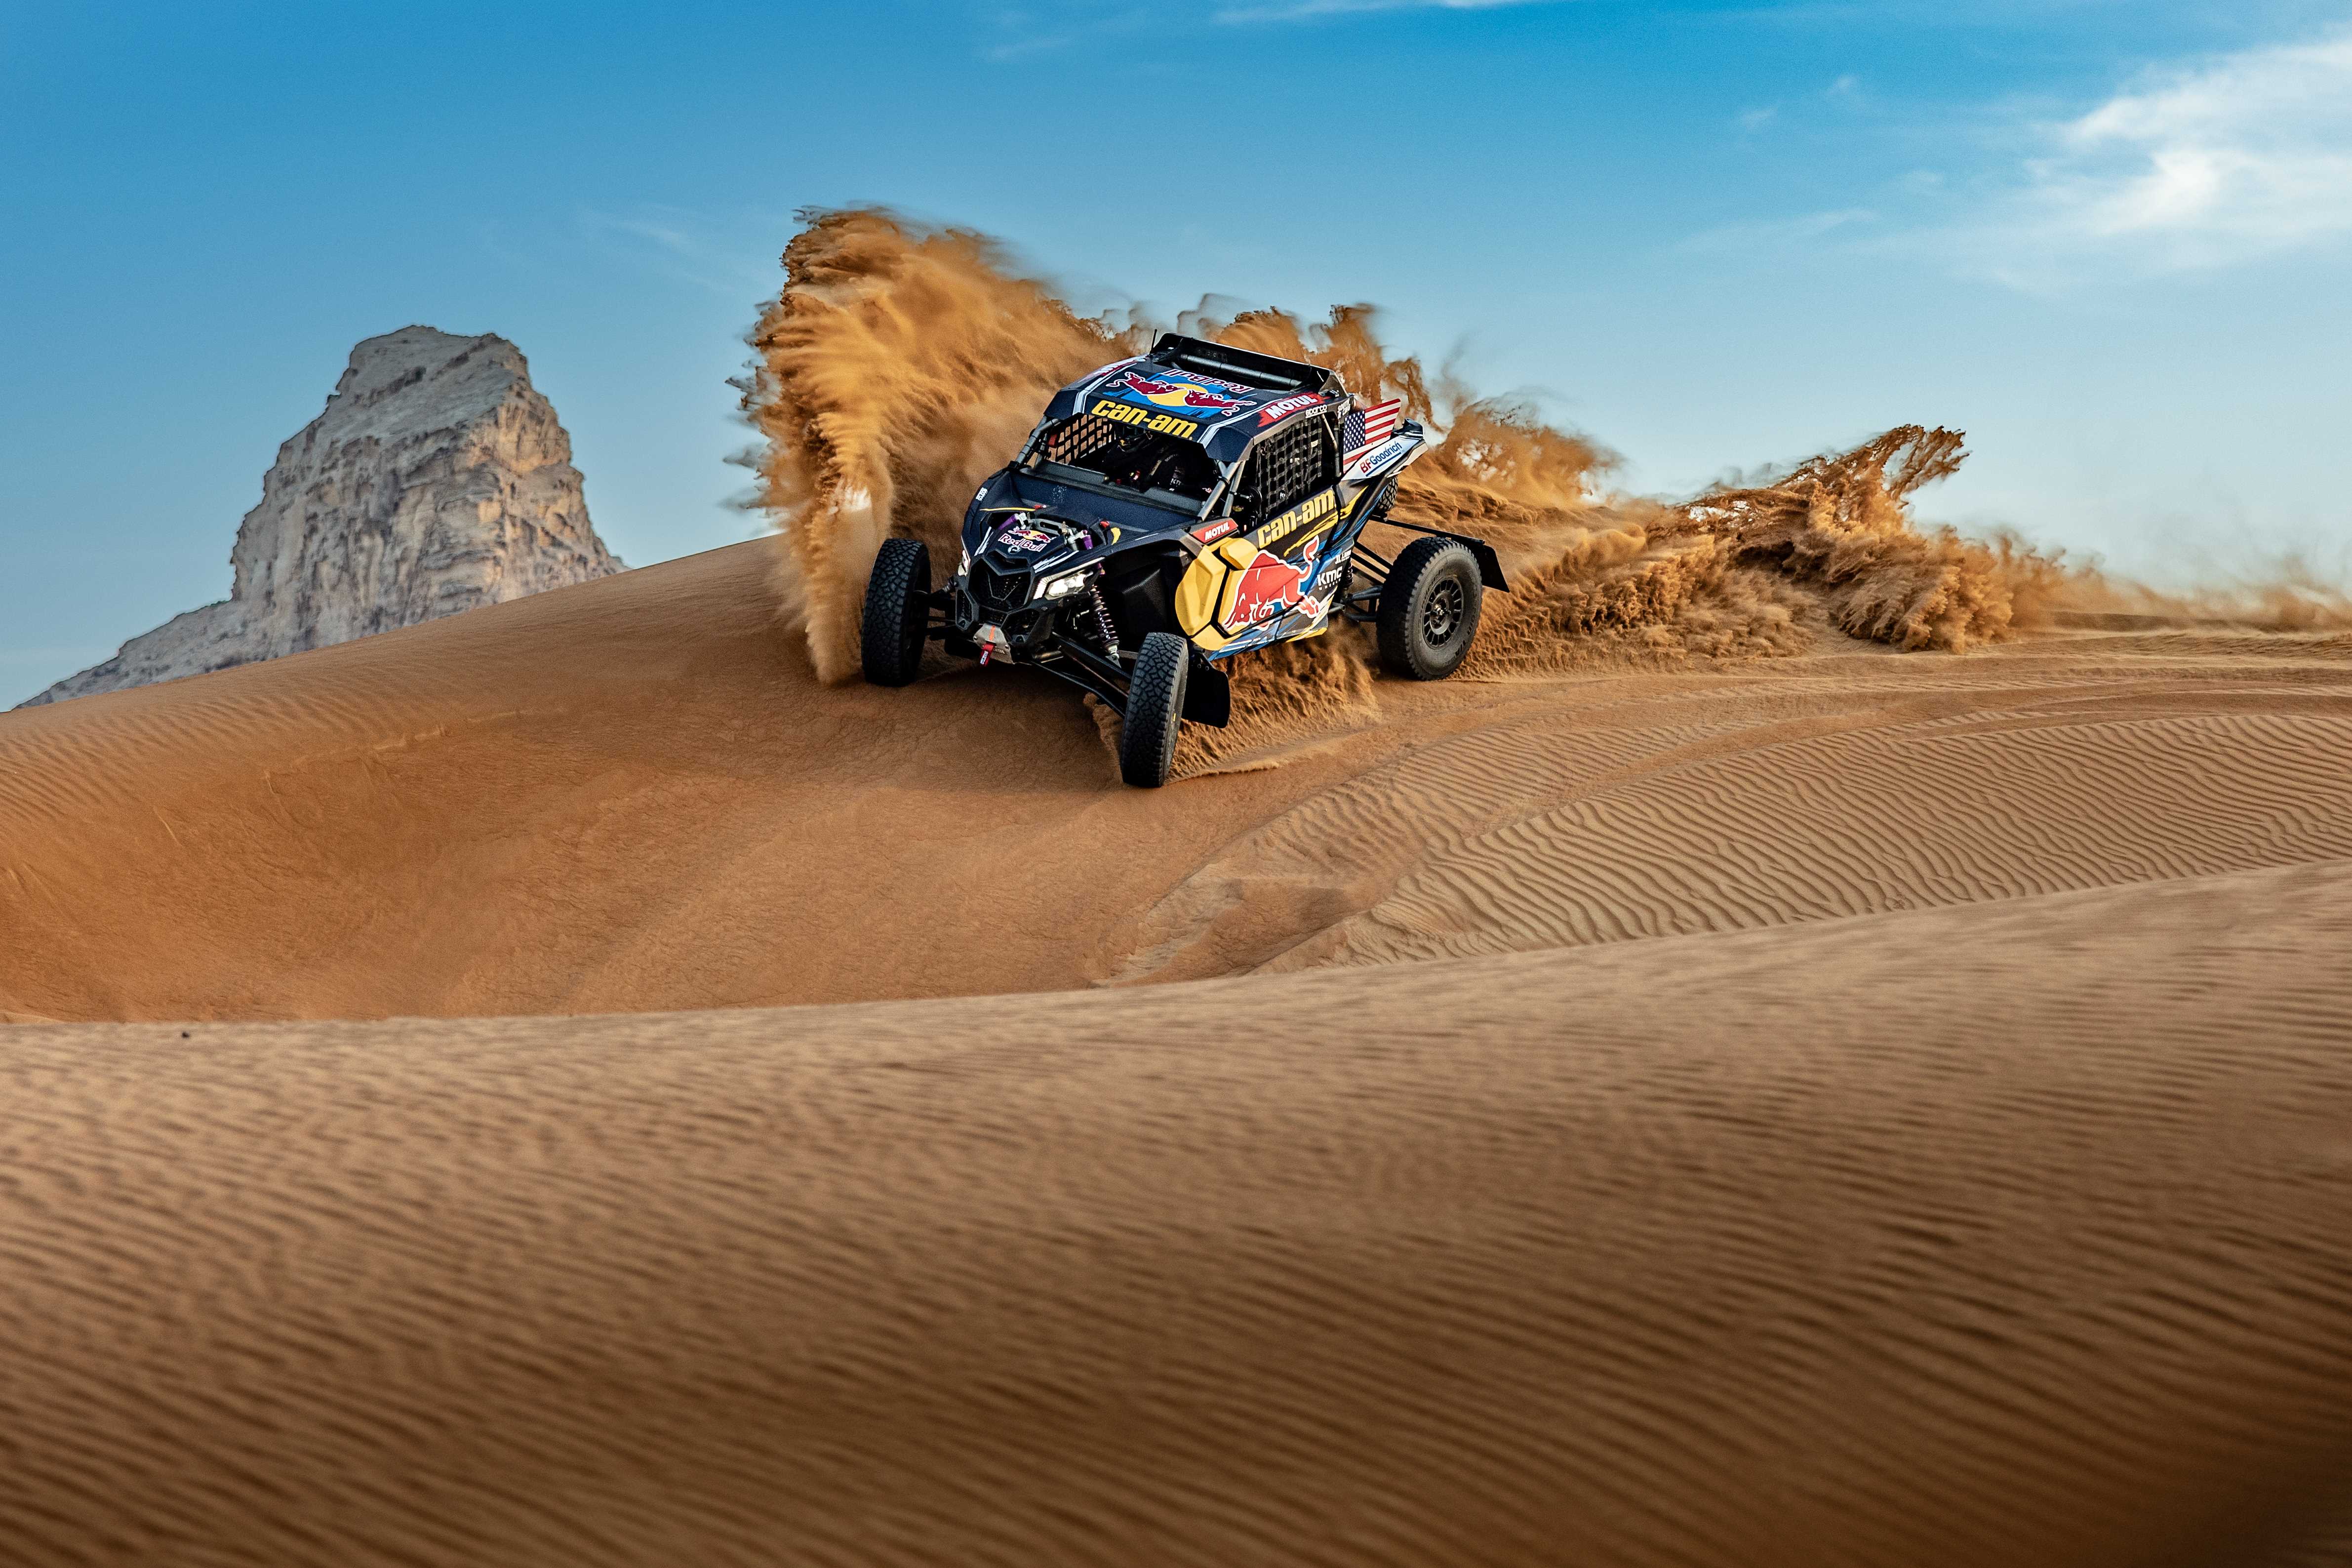 Maverick riding on a sand dune in Saudi Arabia 